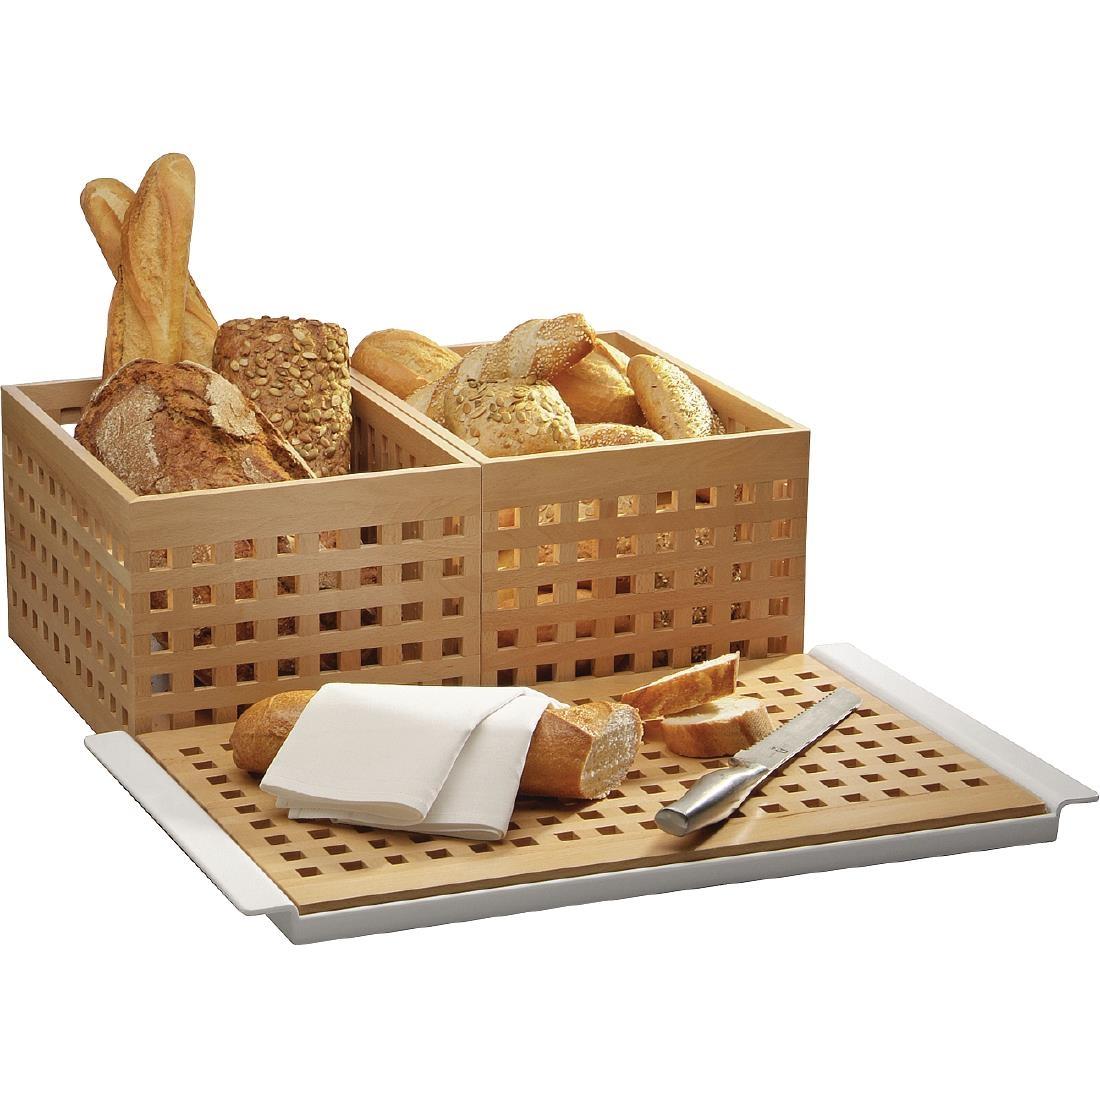 APS Breadstation Breadbox 200mm - GH396  - 3